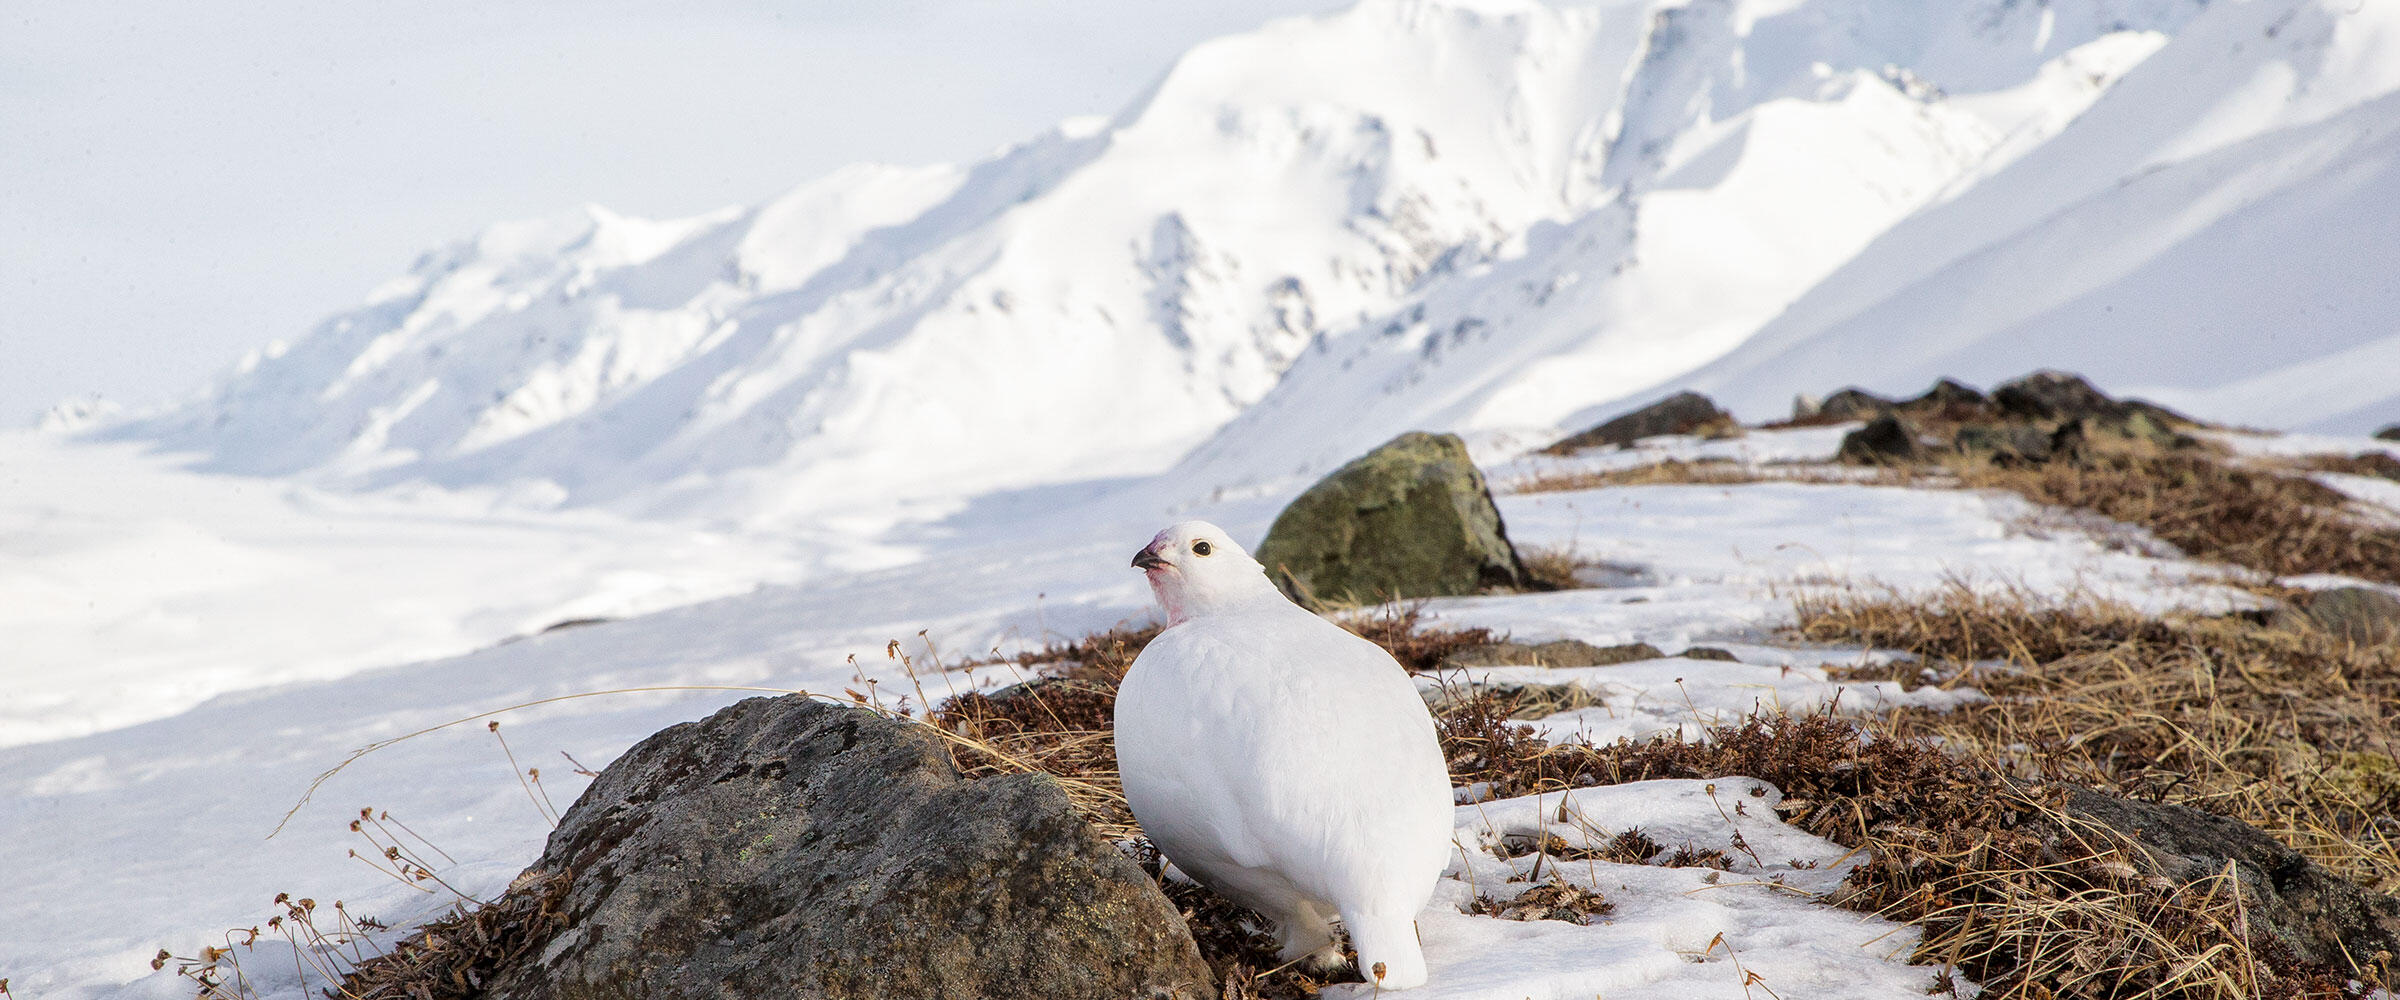 White-tailed Ptarmigan stands in melting snow in alpine habitat.